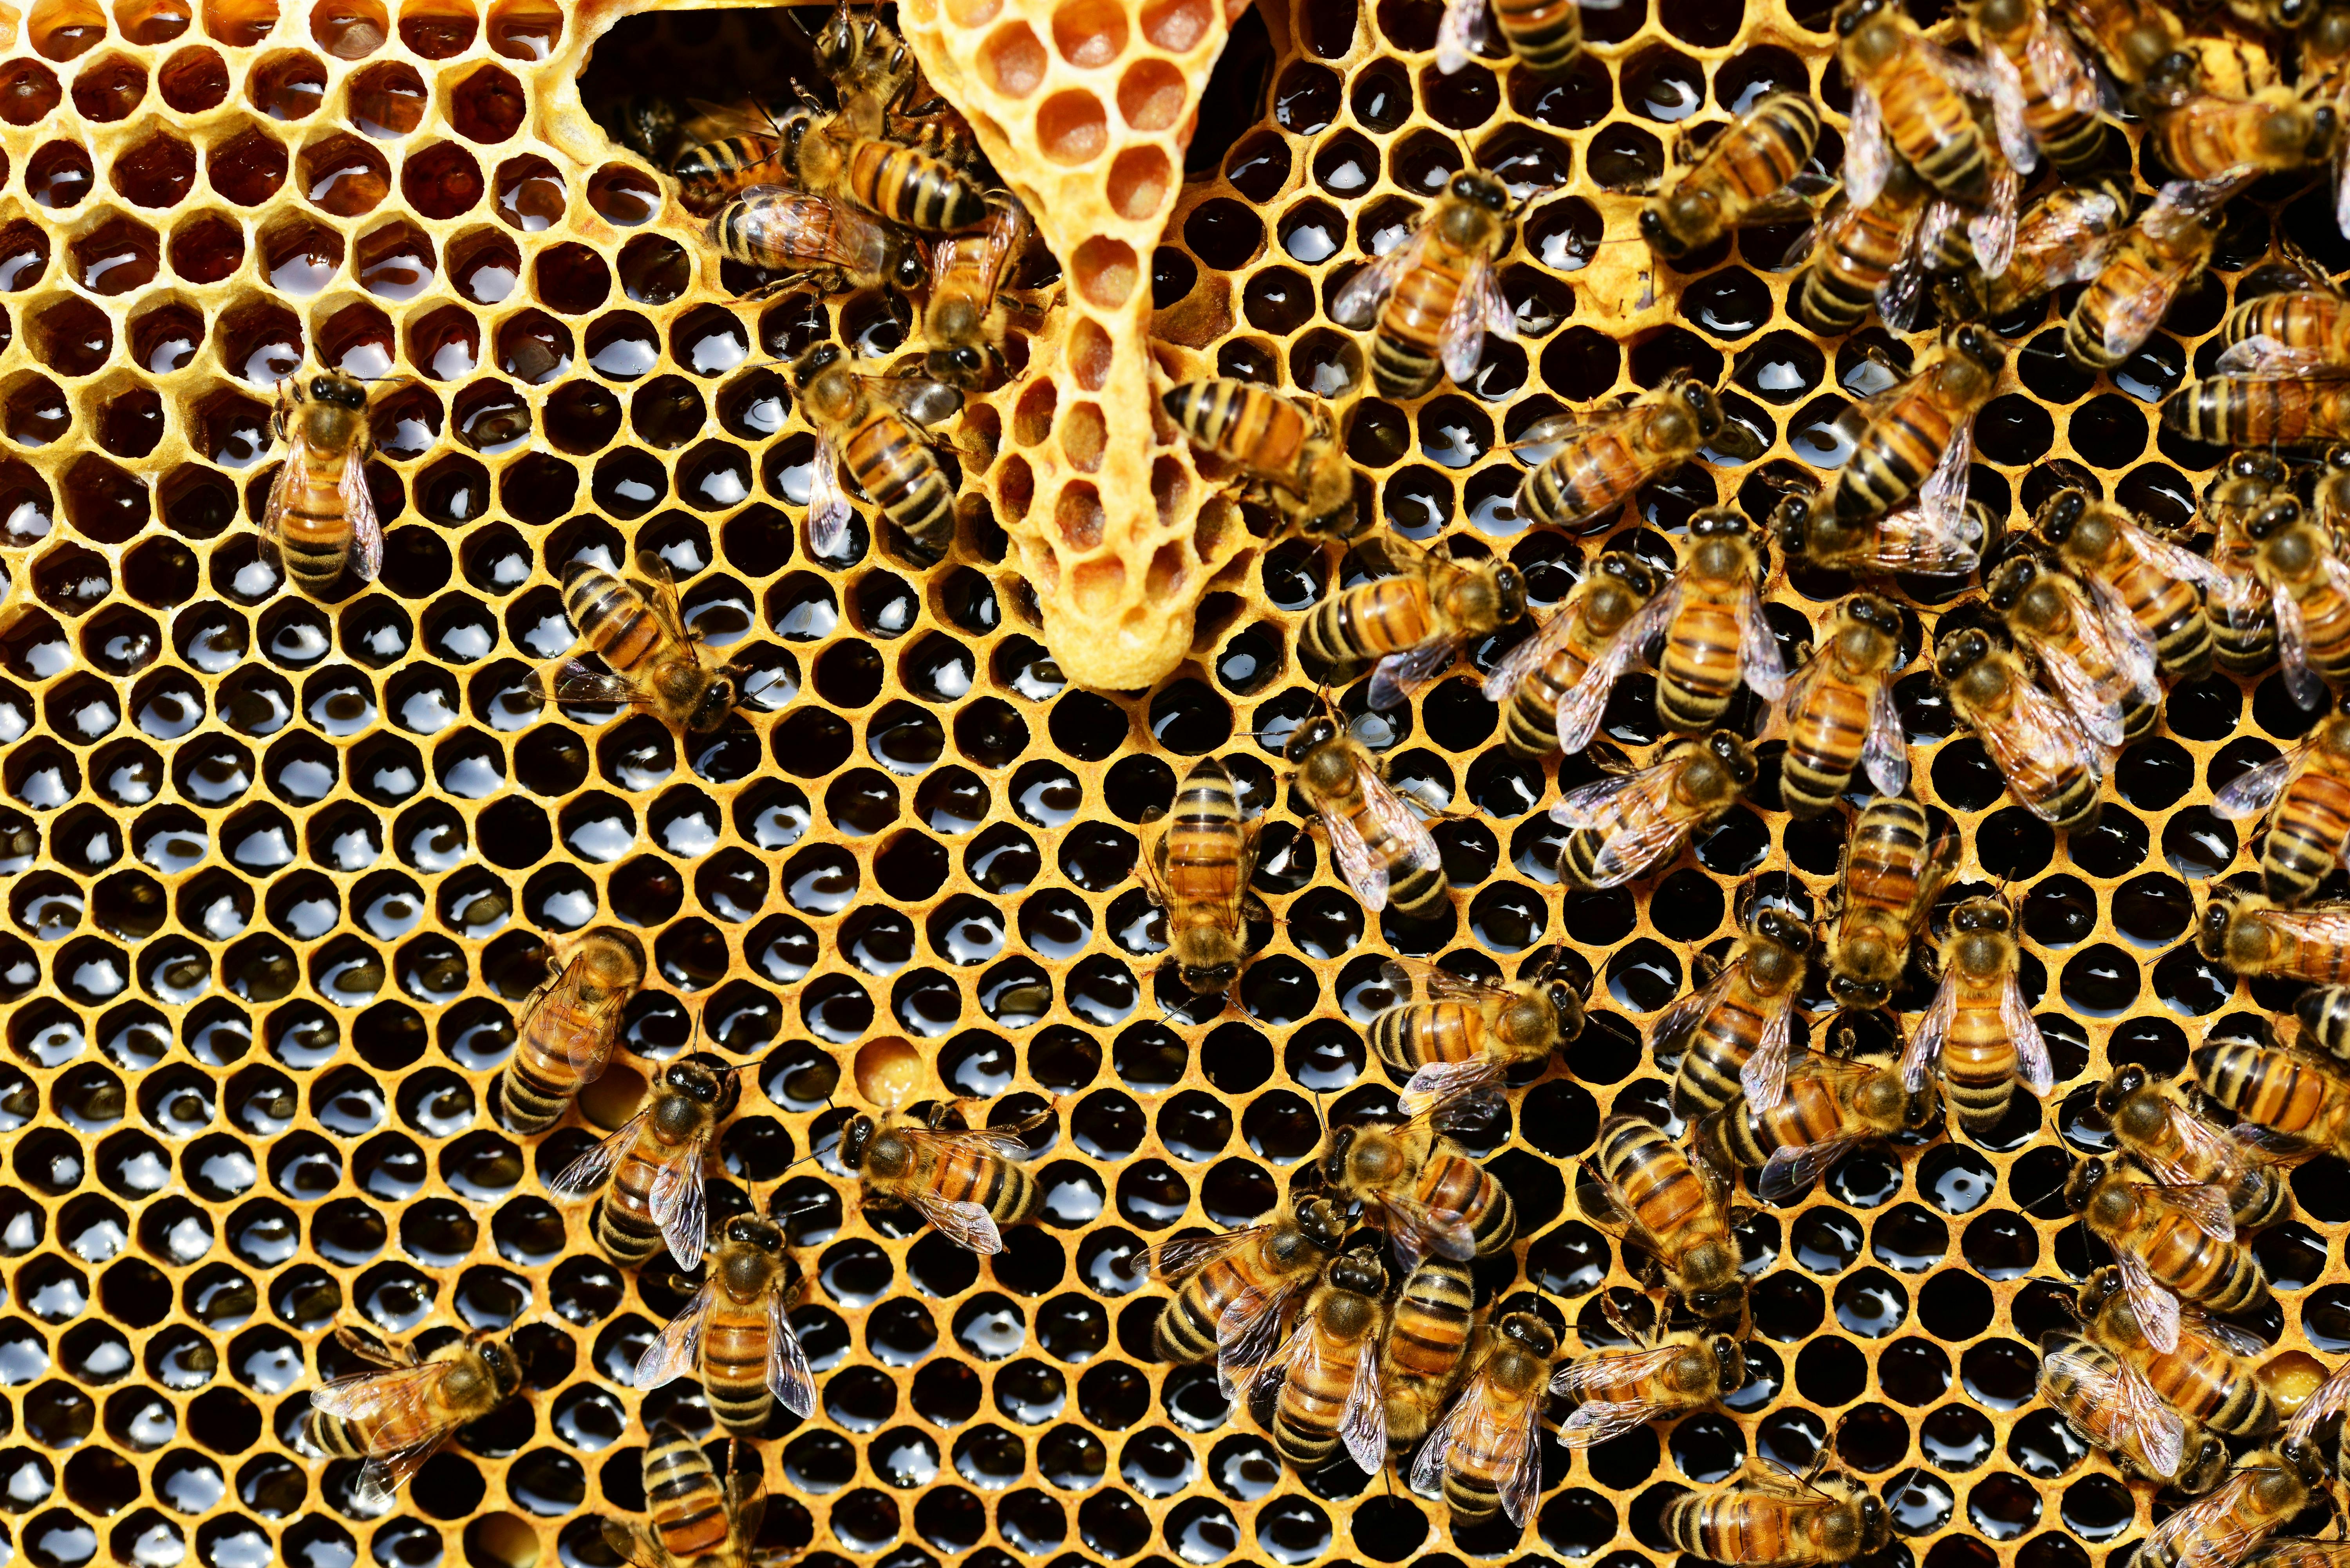 Honeycomb Photos, Download The BEST Free Honeycomb Stock Photos